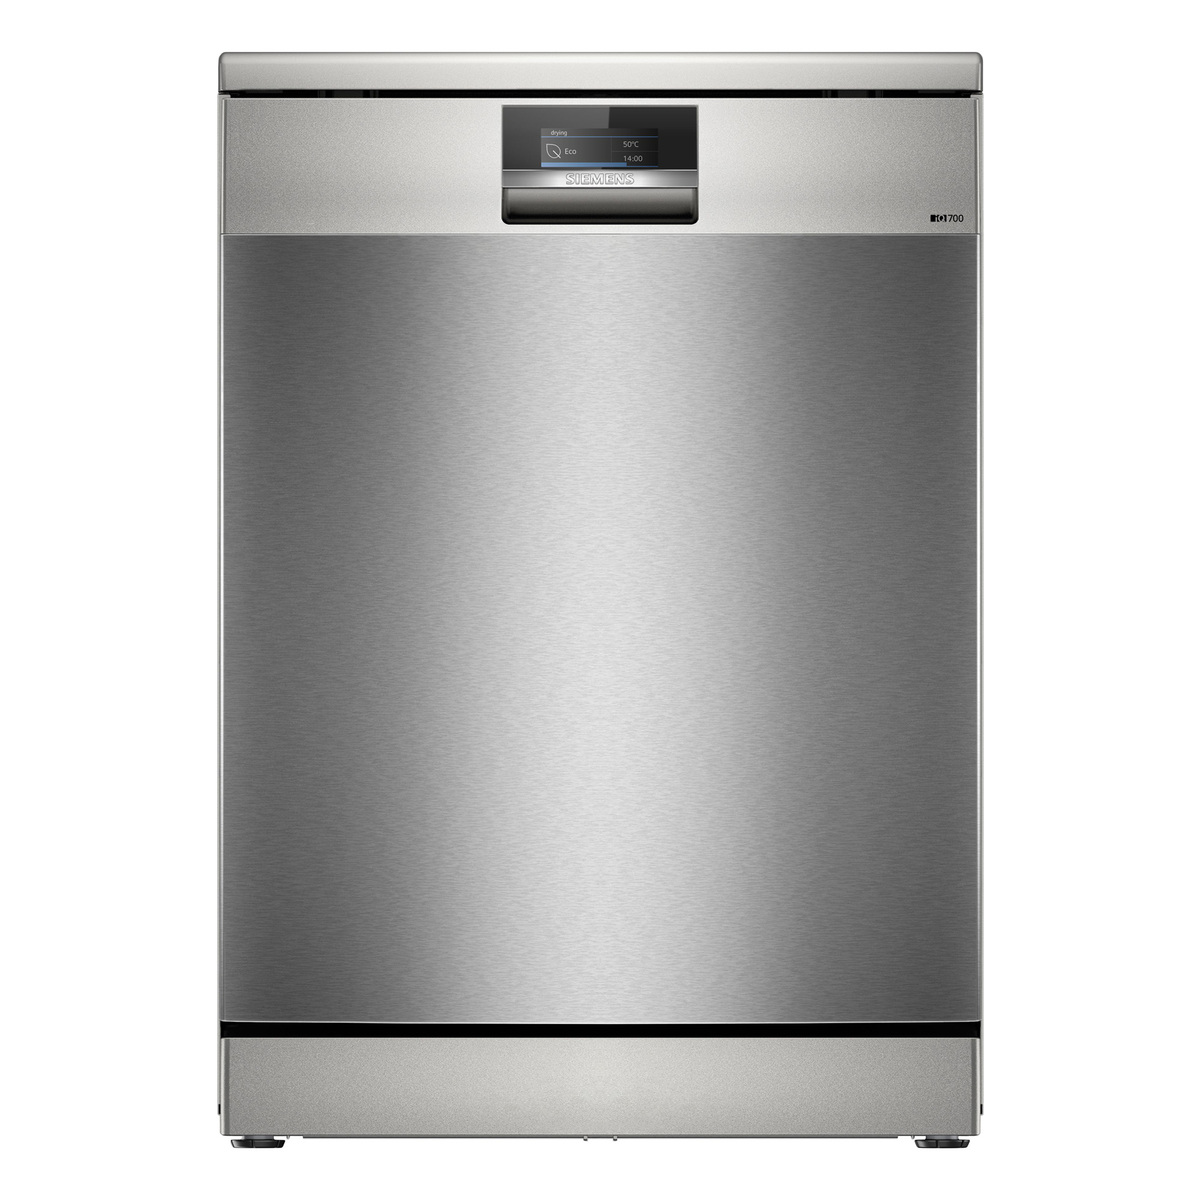 Siemens iQ700 Free Standing Dishwasher, 13 Place Settings, Silver Inox, SN27ZI86DM